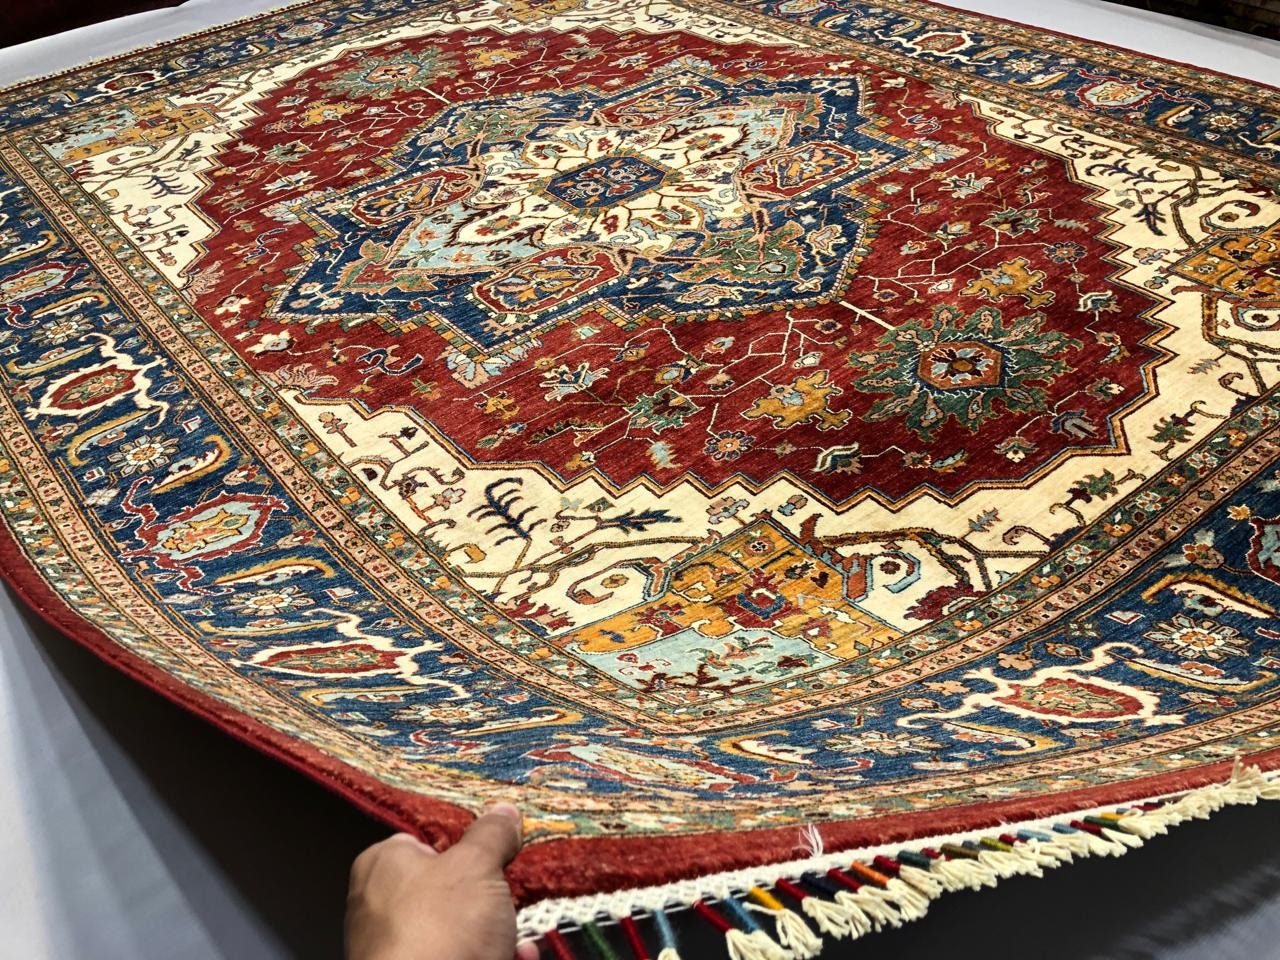 8x12 Feet Top Quality Mamluk Handmade Afghan Rug, Persian Designed from Tribal Ghazni | Living room Carpet, Neon Colored